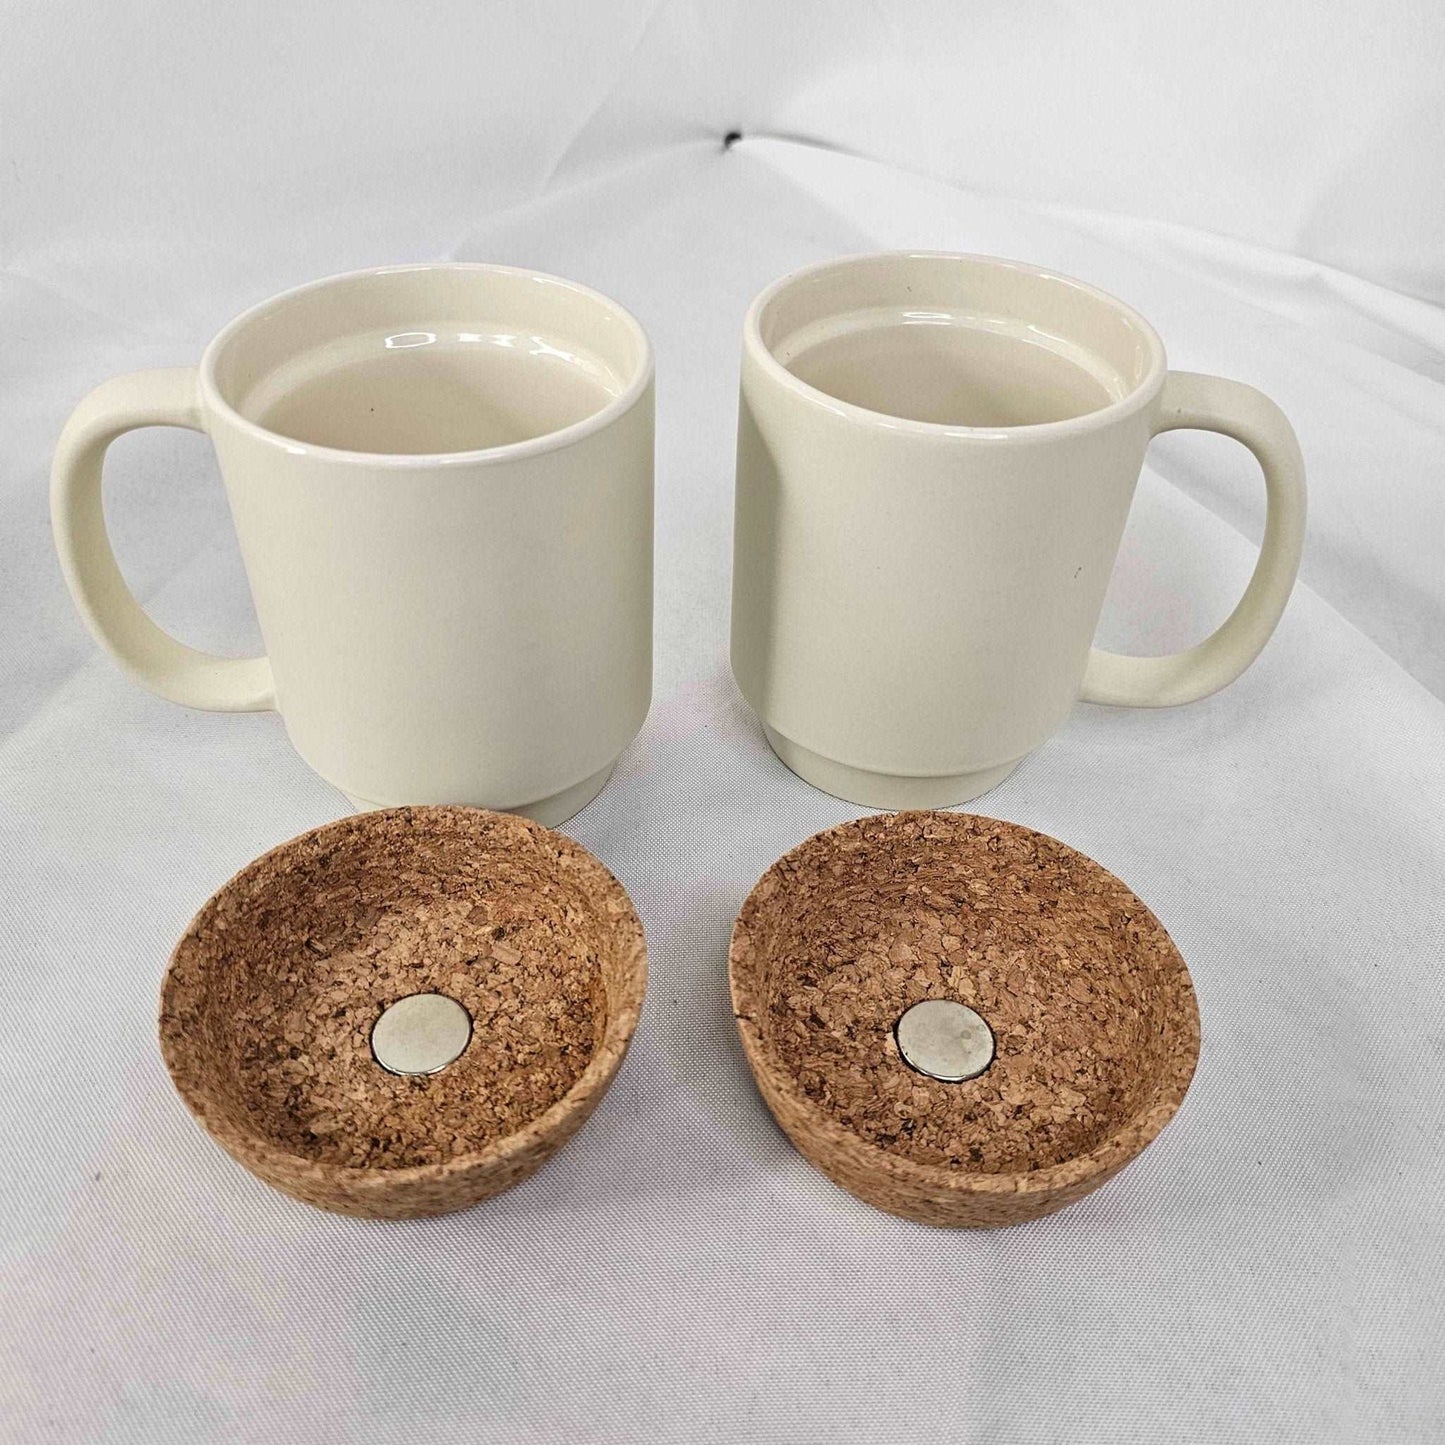 15 OZ Set of 2 Ceramic Mug with Cork Bottom Dowan - DQ Distribution